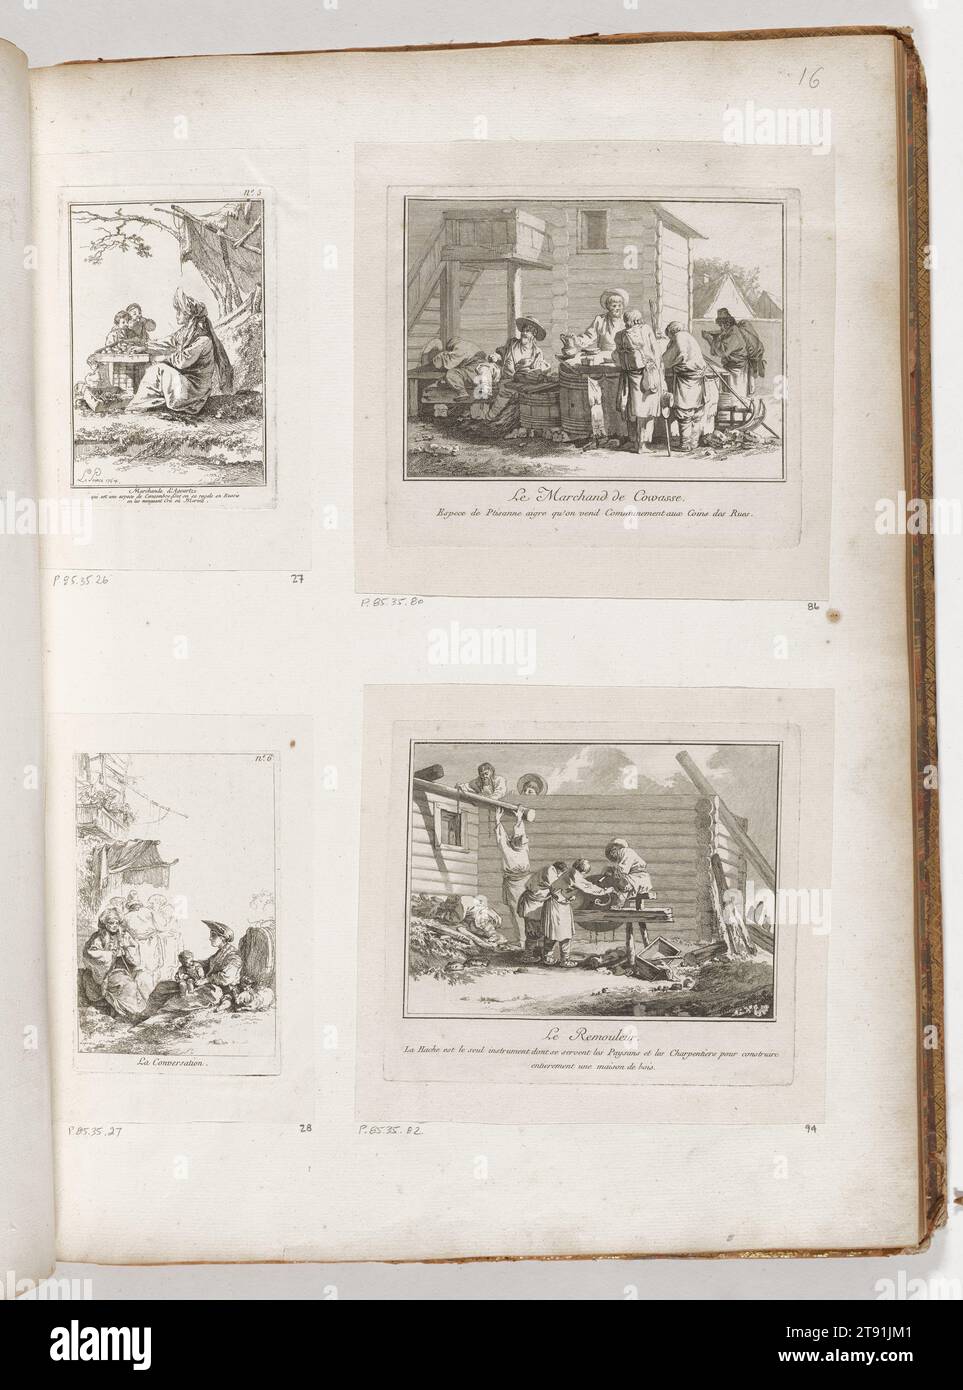 Agourtzi Seller, 1764, Jean-Baptiste Le Prince, French, 1734 - 1781, 5 x 3 1/2 in. (12.7 x 8.89 cm) (image)5 5/8 x 3 7/8 in. (14.29 x 9.84 cm) (plate)7 3/8 x 5 in. (18.73 x 12.7 cm) (sheet), Etching, France, 18th century Stock Photo